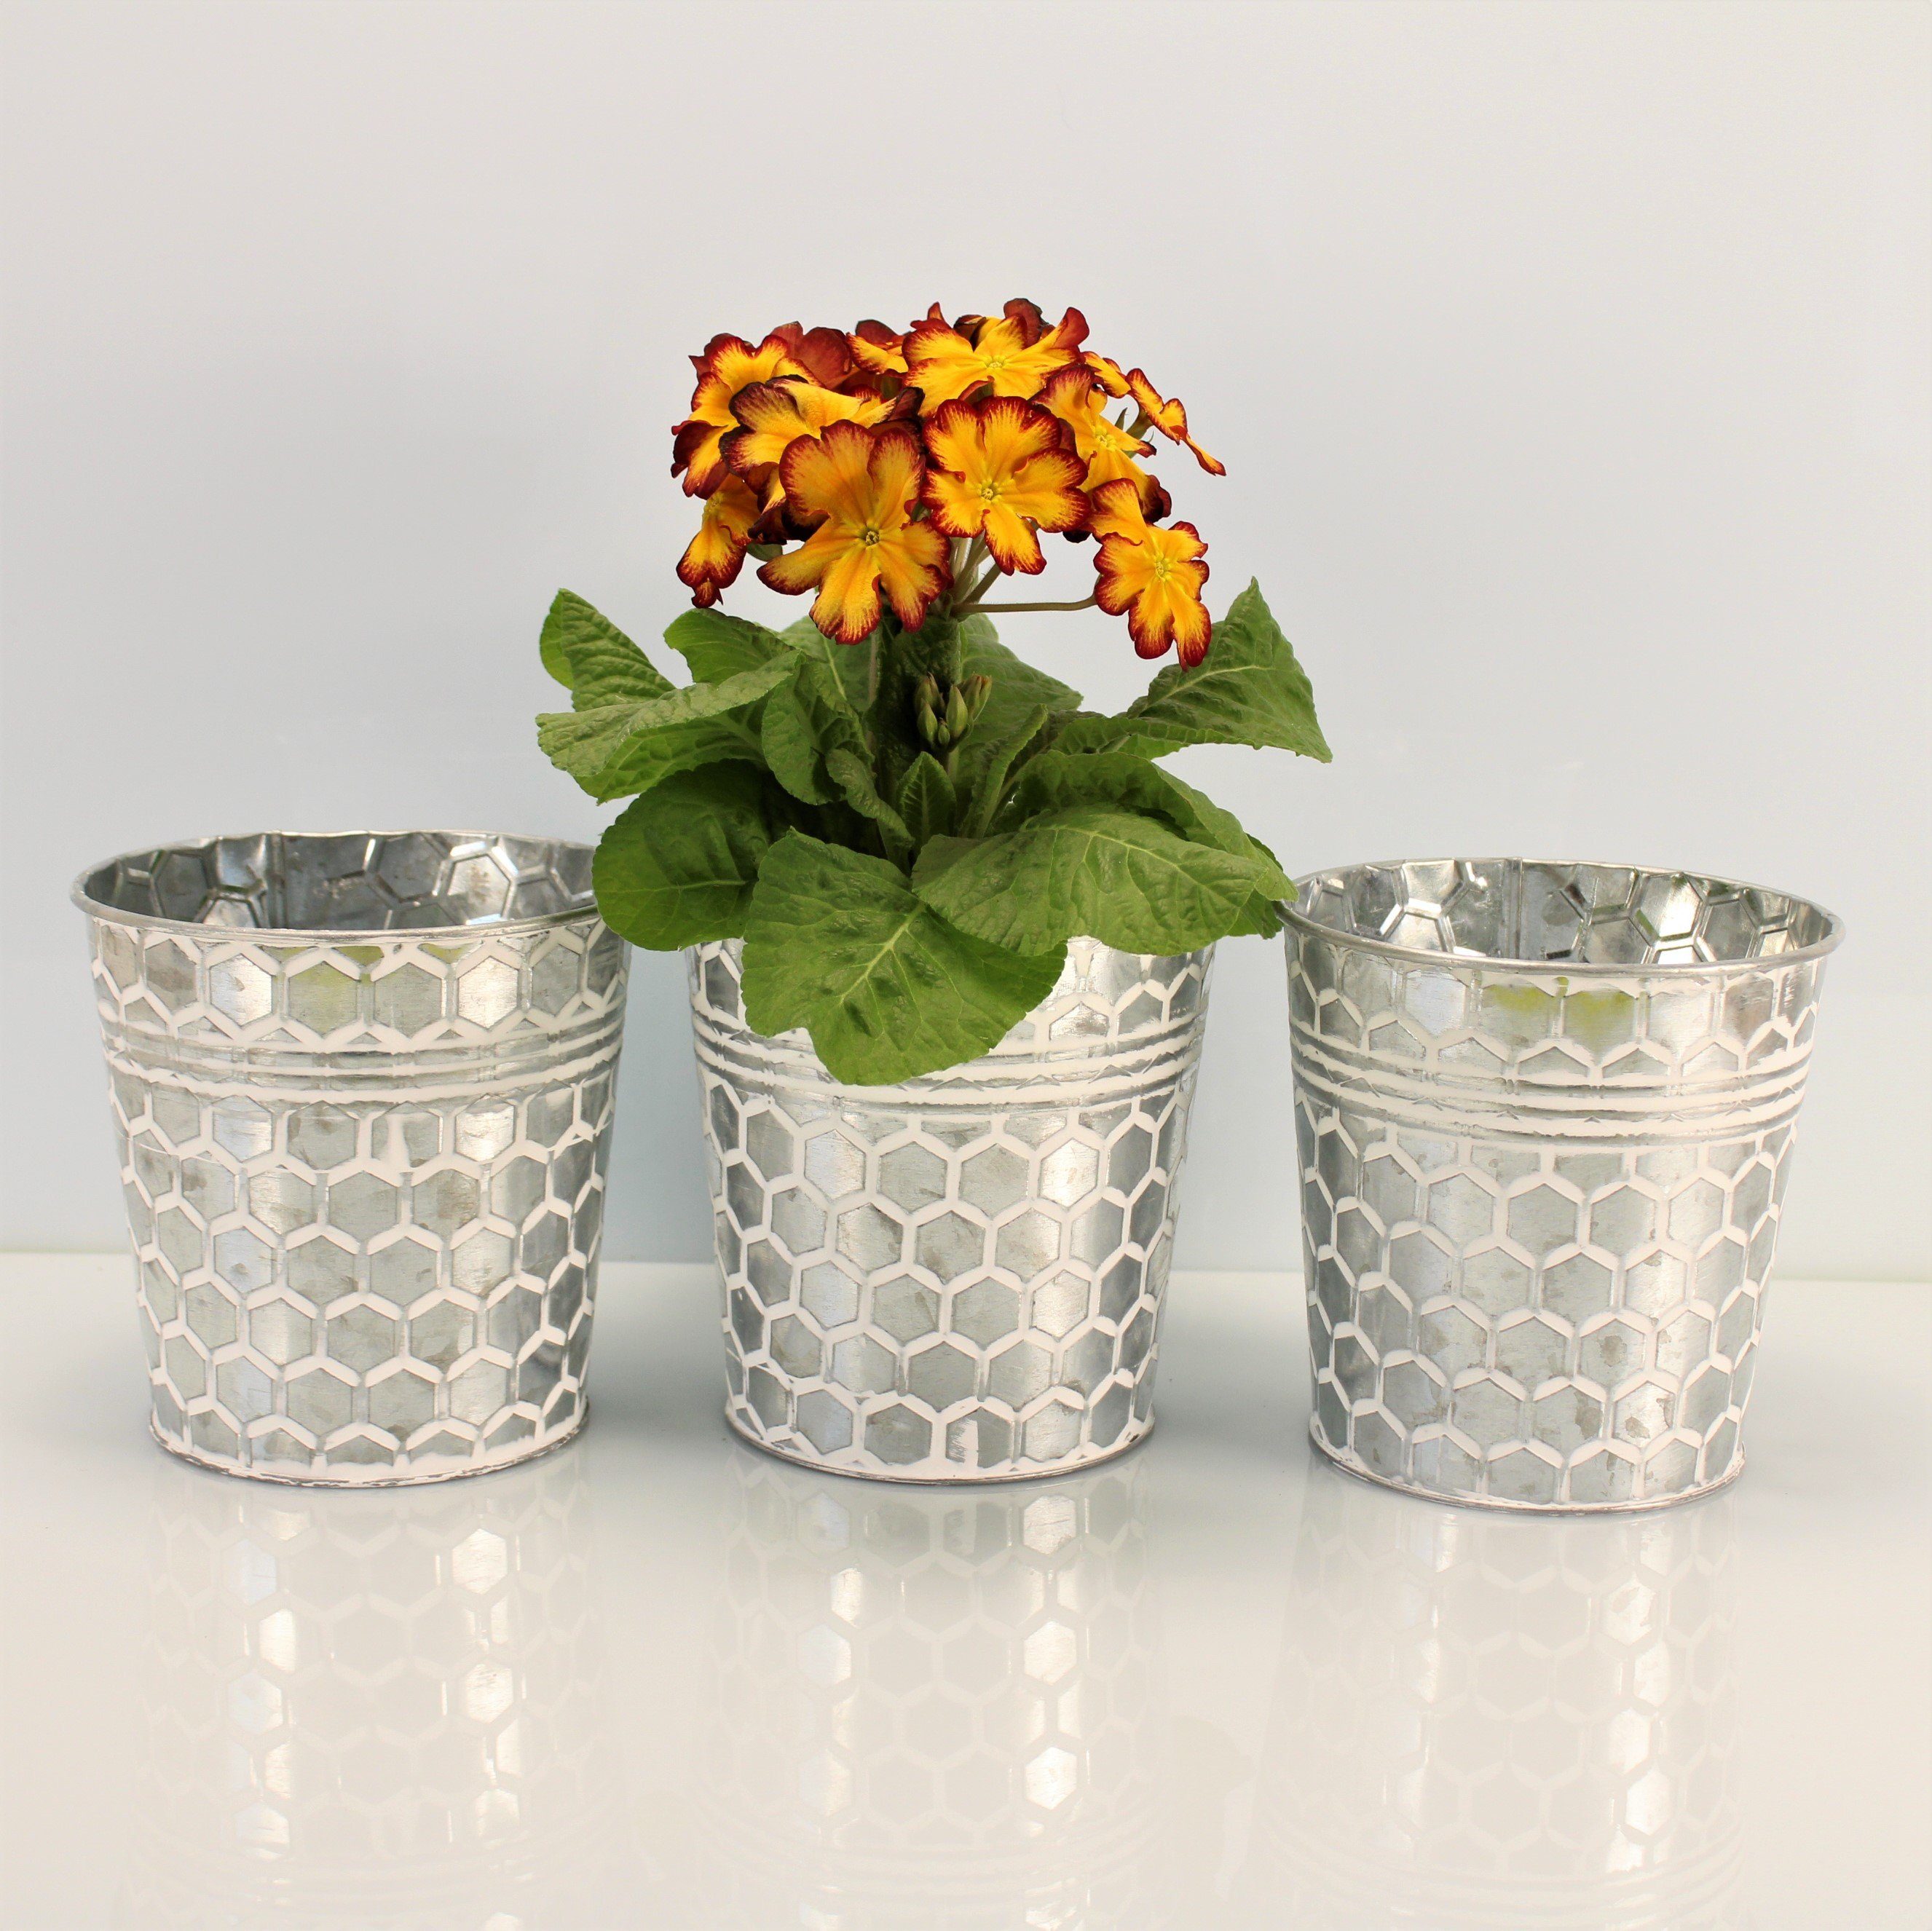 Online-Fuchs Blumentopf Runde silberne Blumentöpfe aus Metall mit Wabenmuster Kräutertopf (3er Set), Vintage-Art